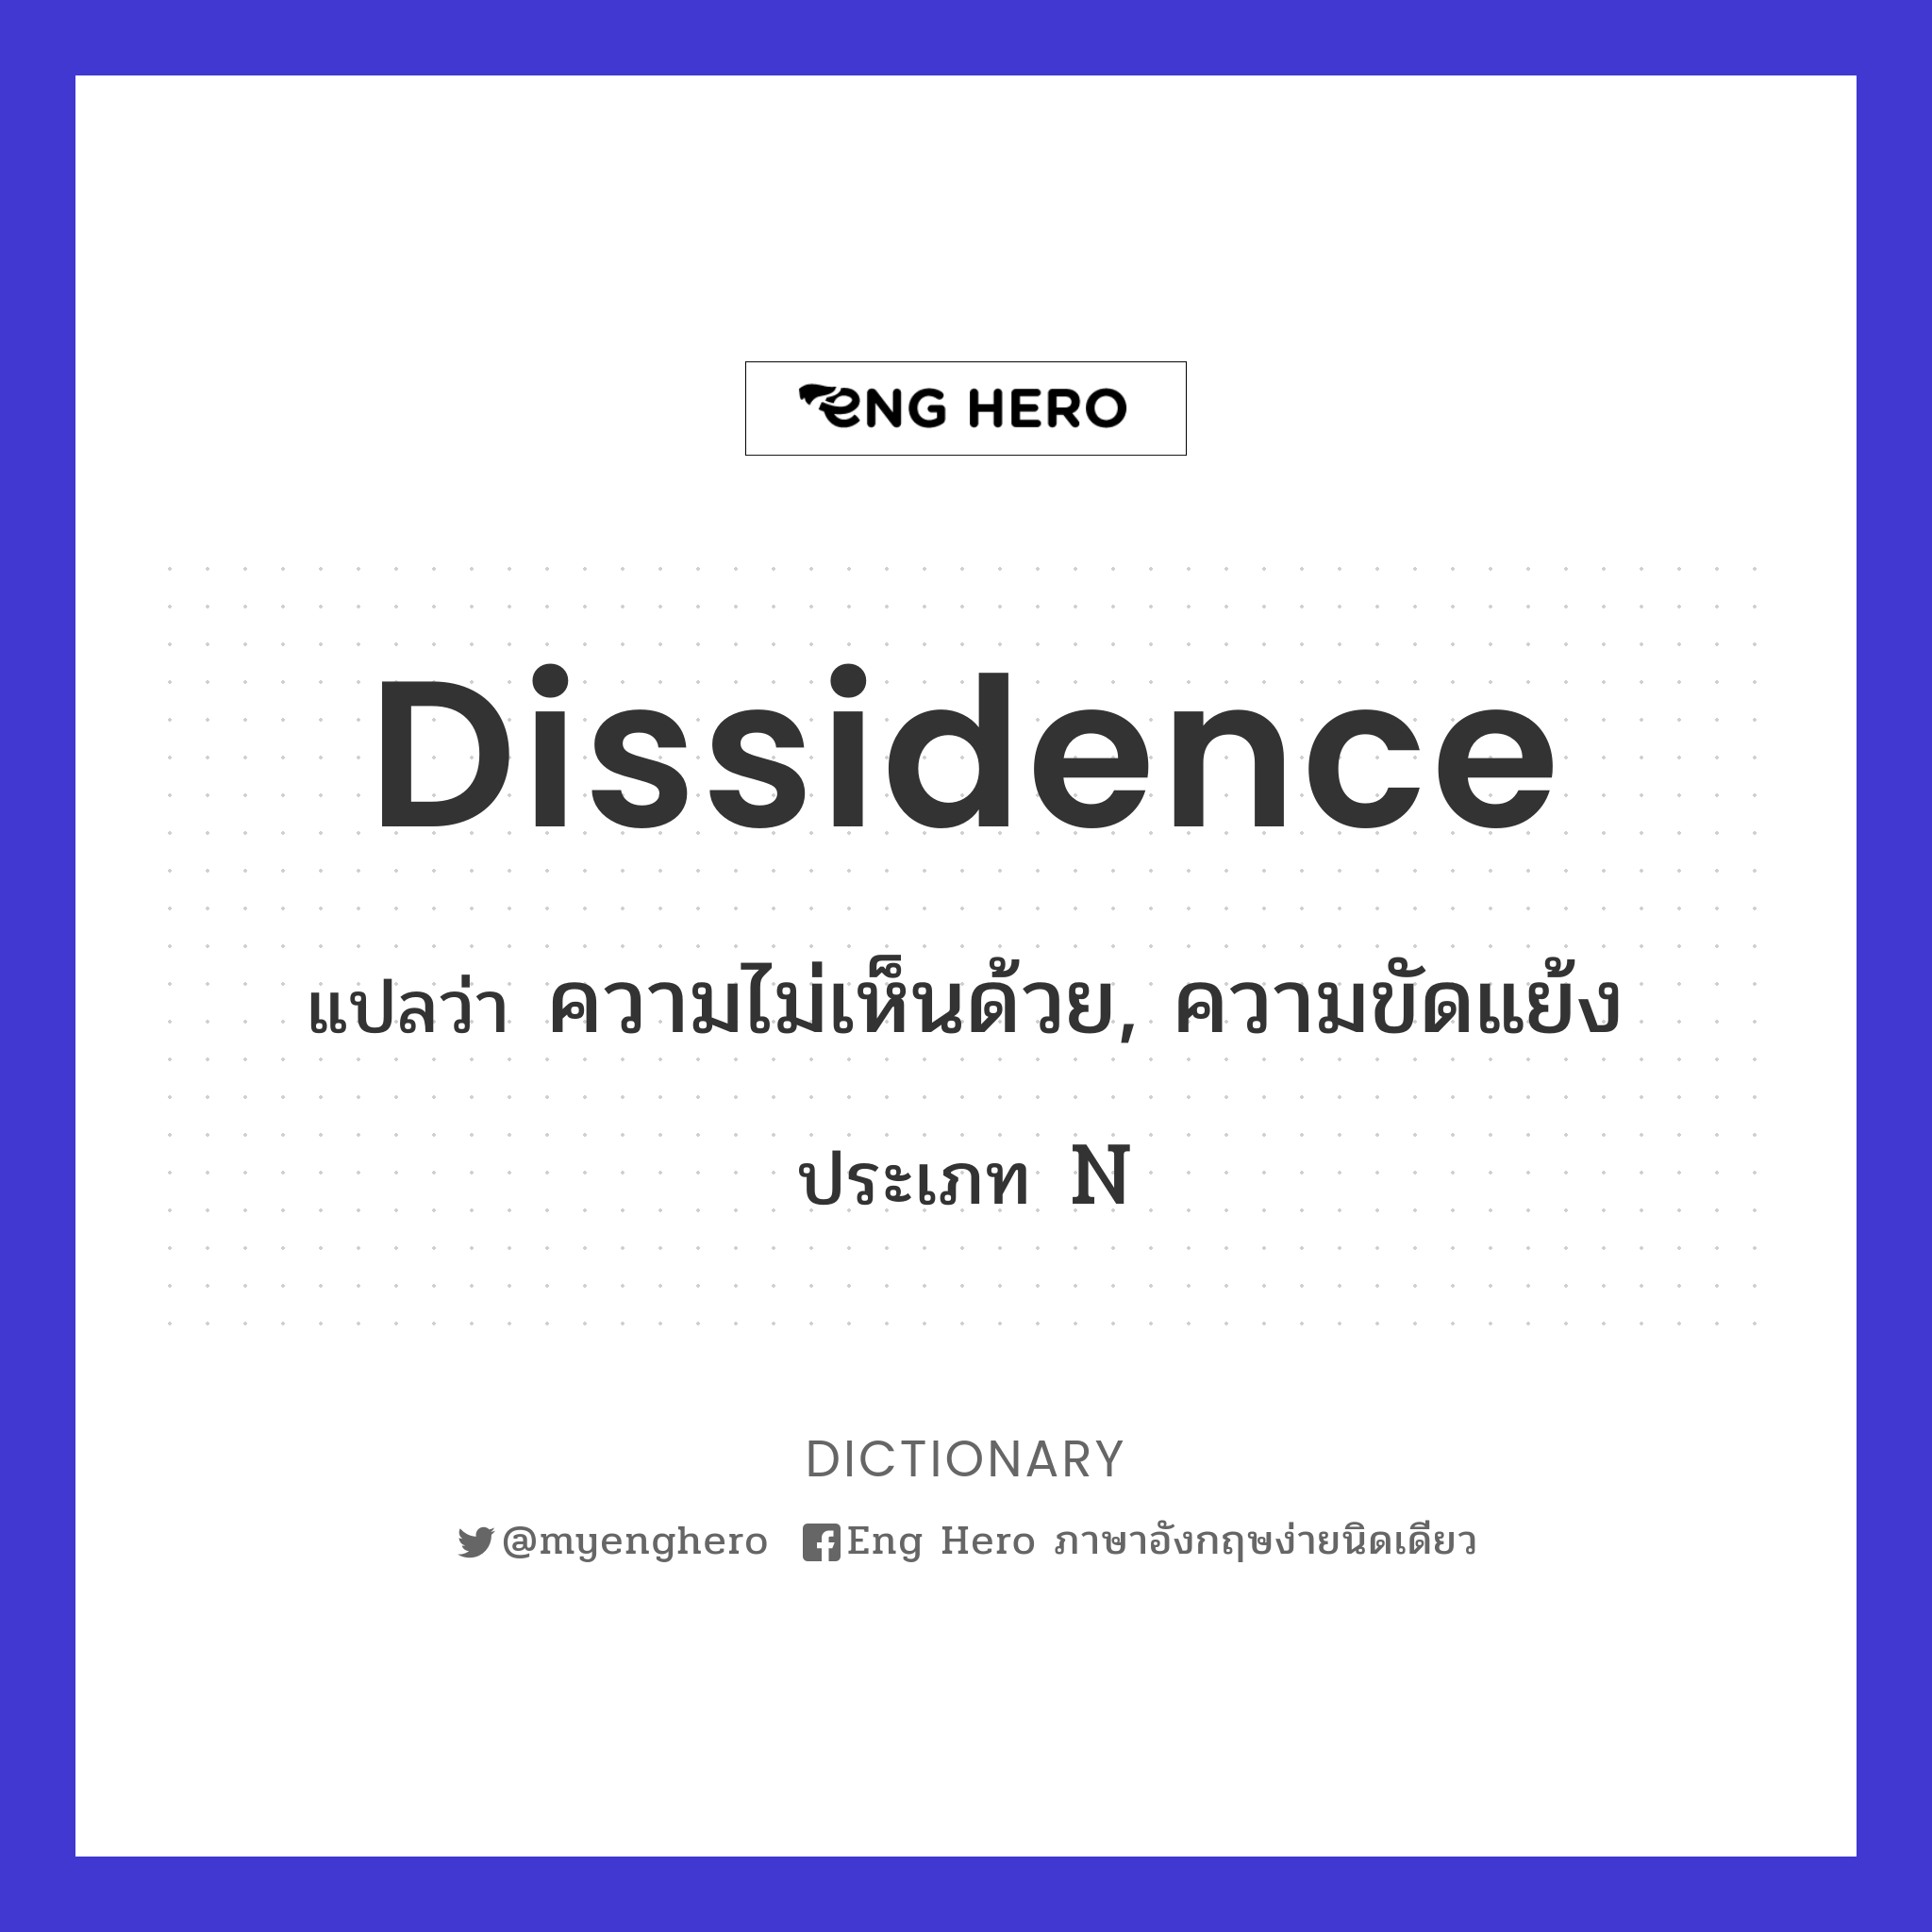 dissidence